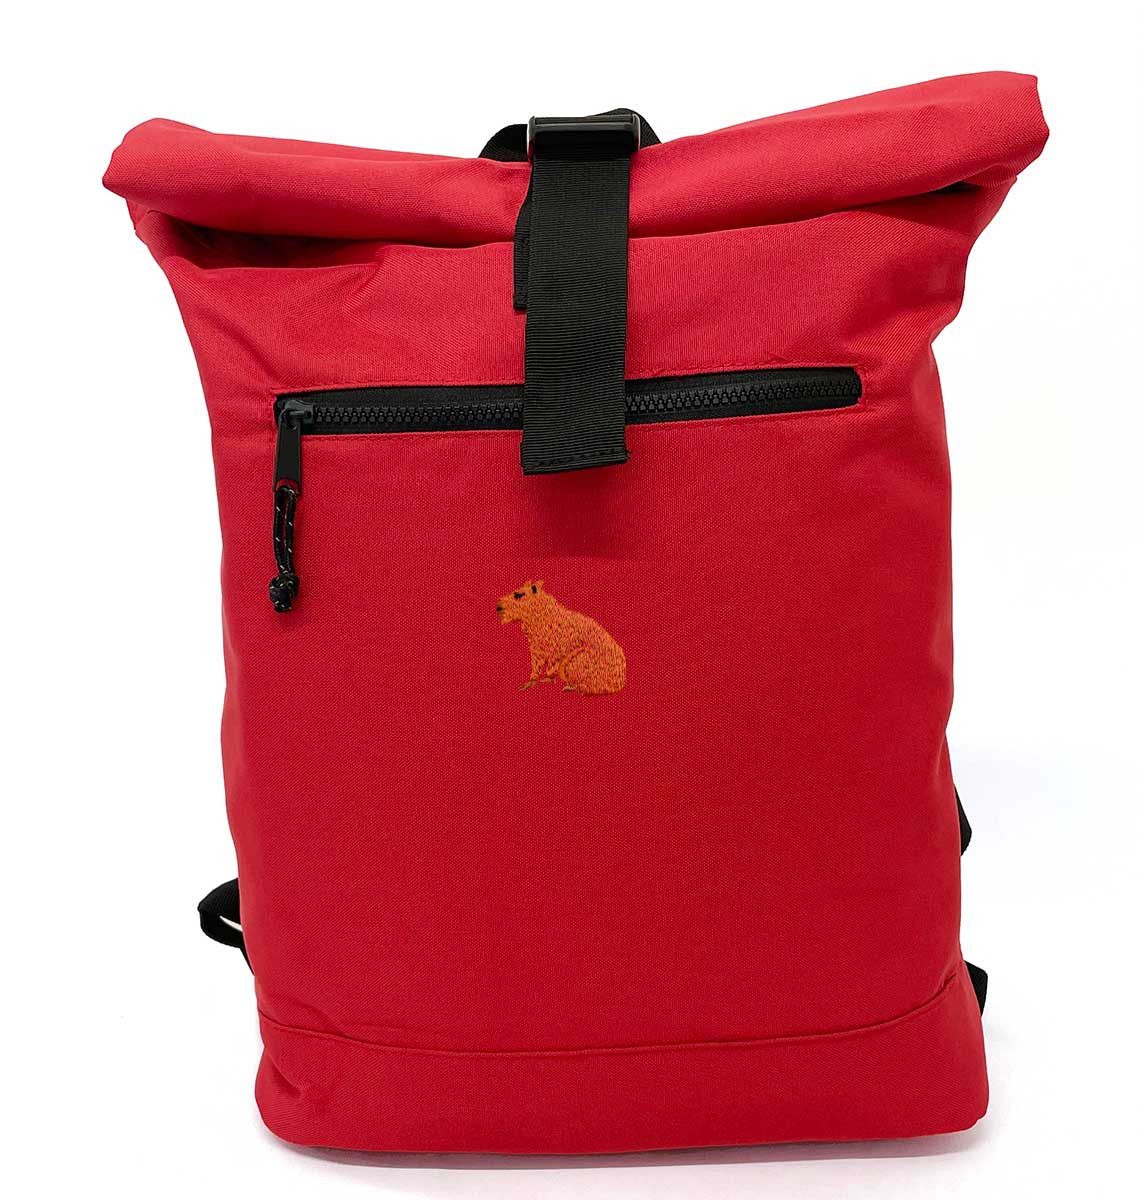 Capybara Beach Roll-top Recycled Backpack - Blue Panda